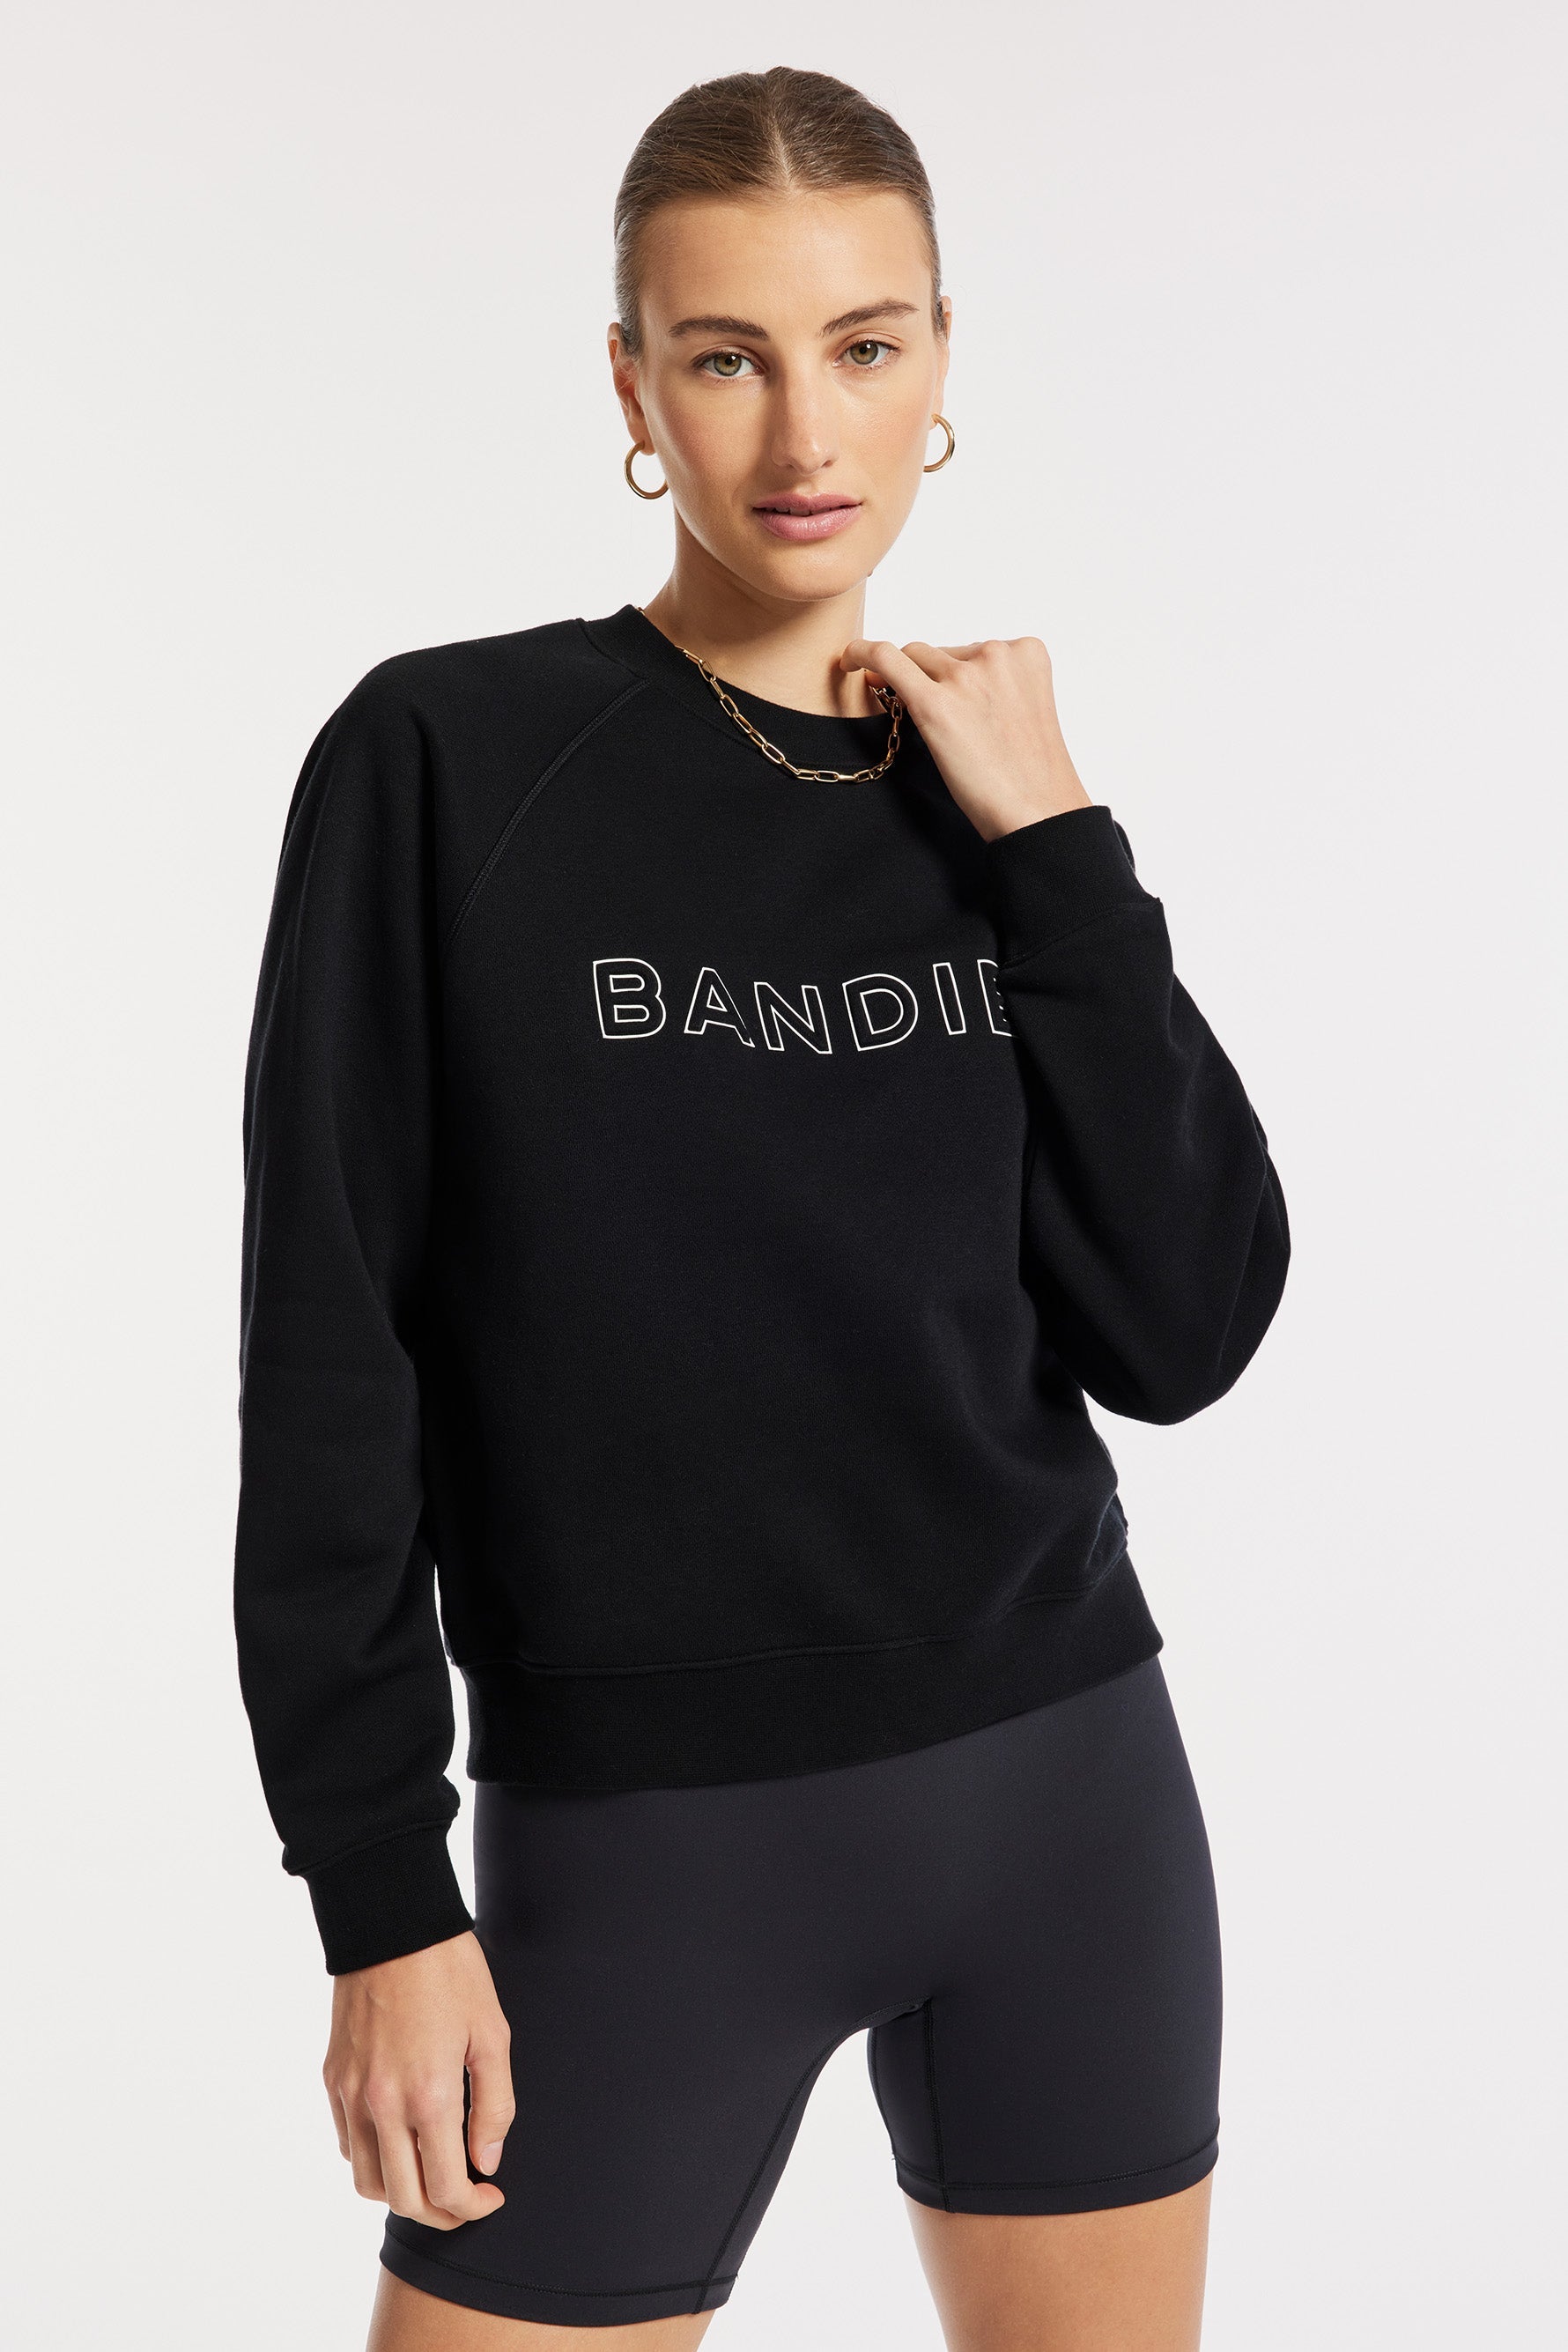 Bandier Graphic Sweatshirt